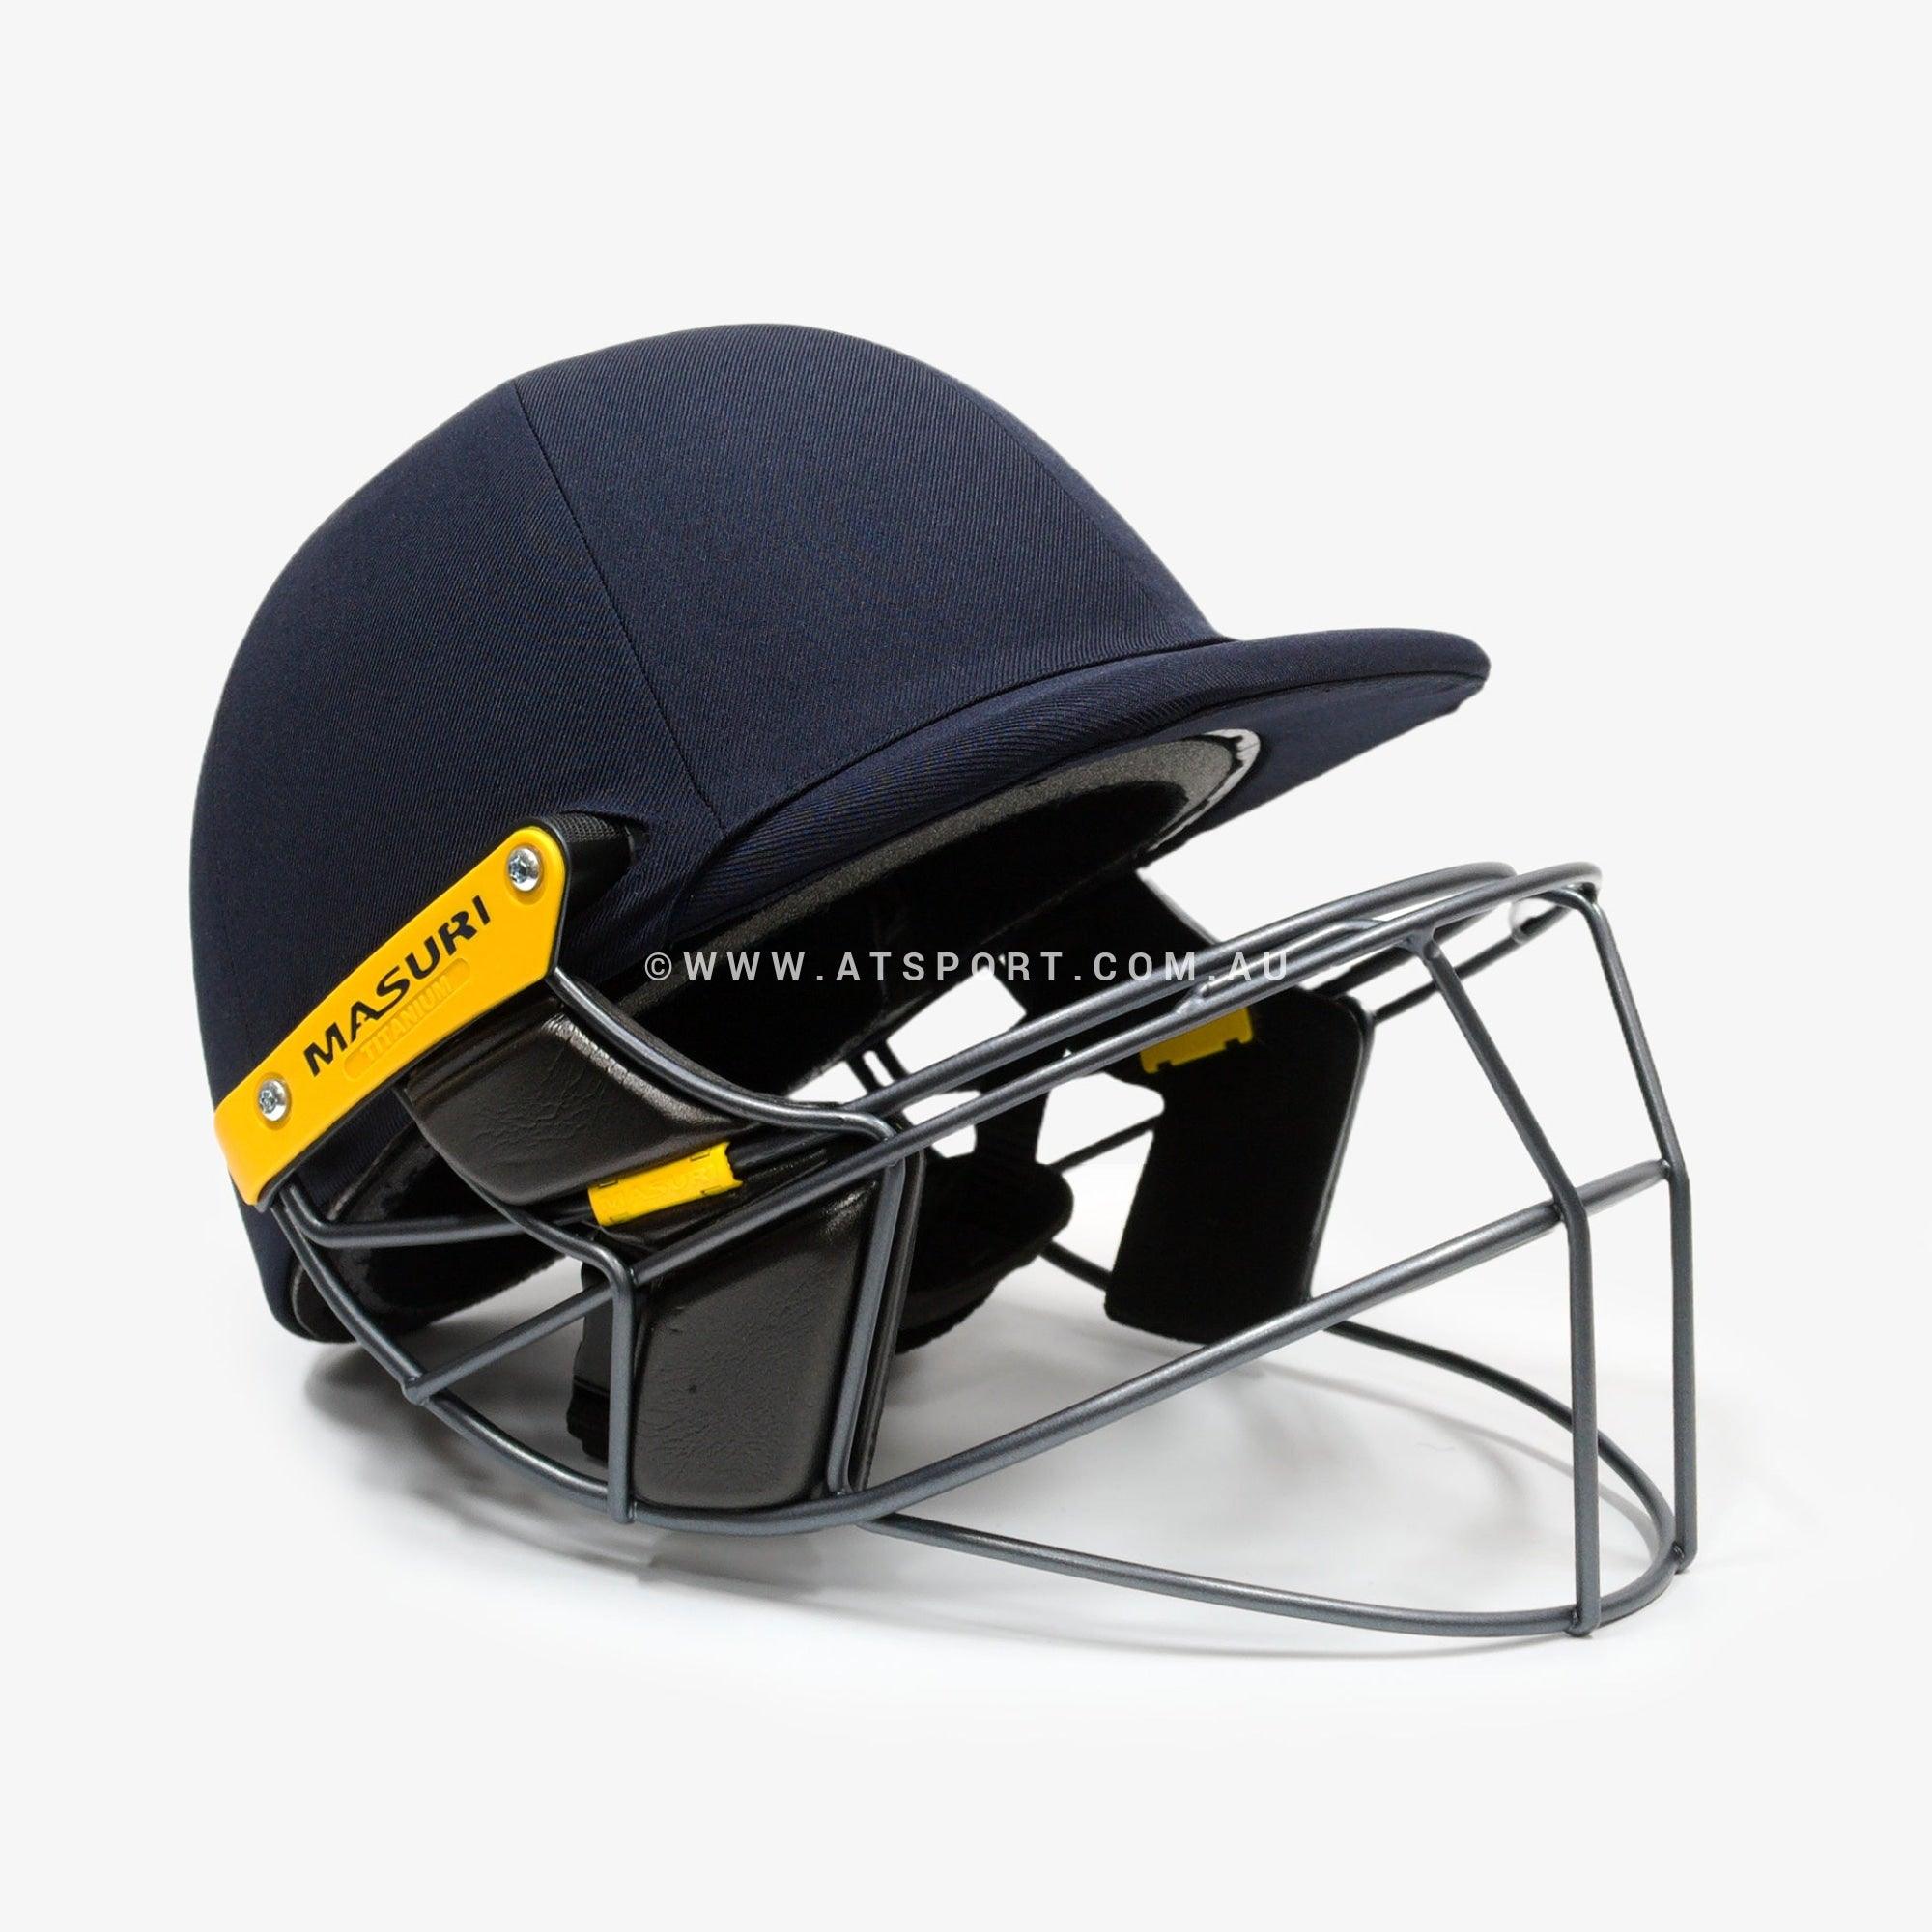 Masuri E LINE TITANIUM Grille Cricket Helmet - AT Sports